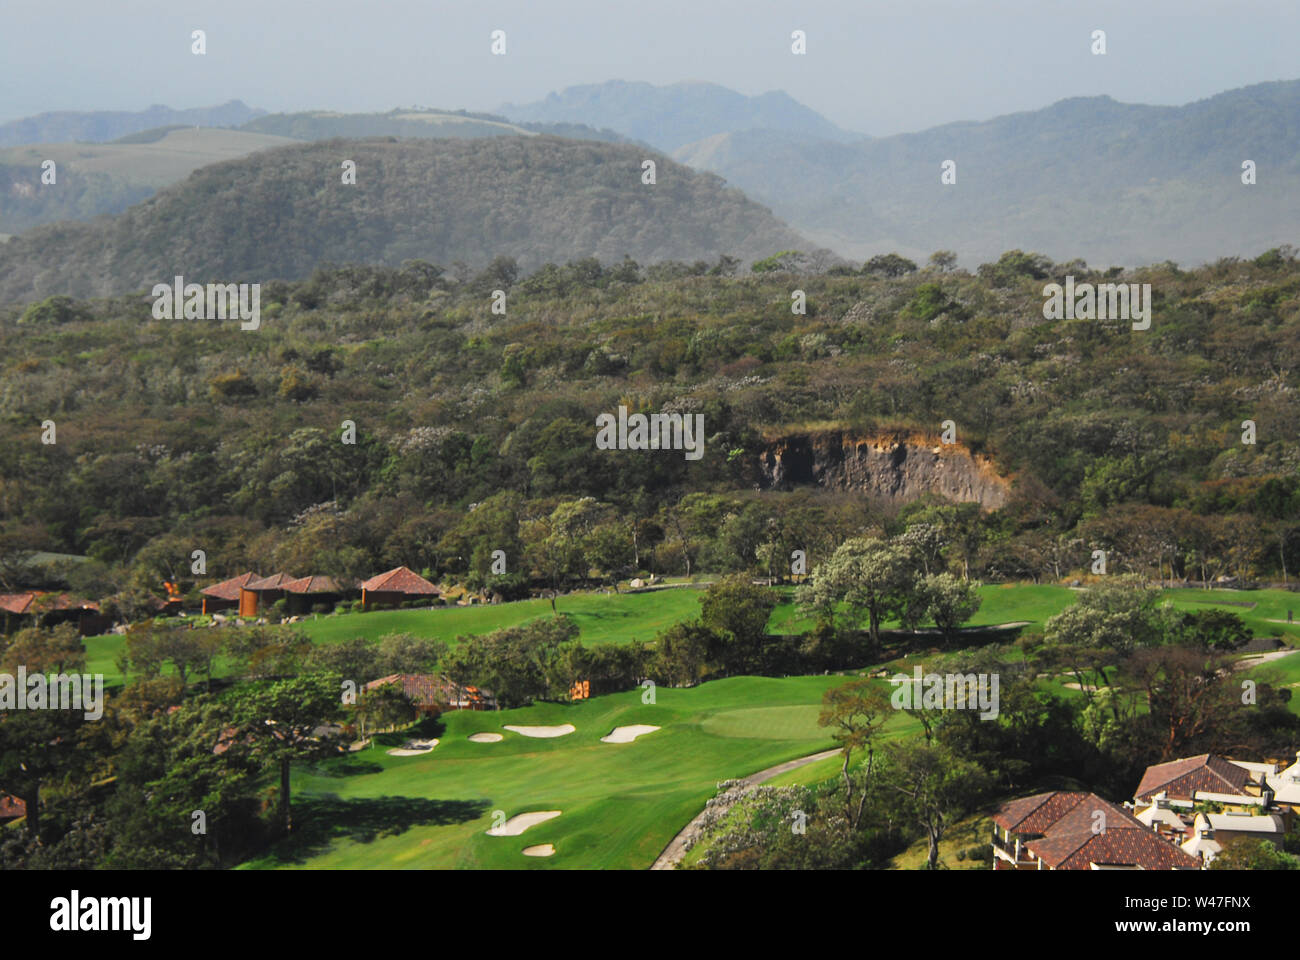 La reunion golf guatemala hi-res stock photography and images - Alamy